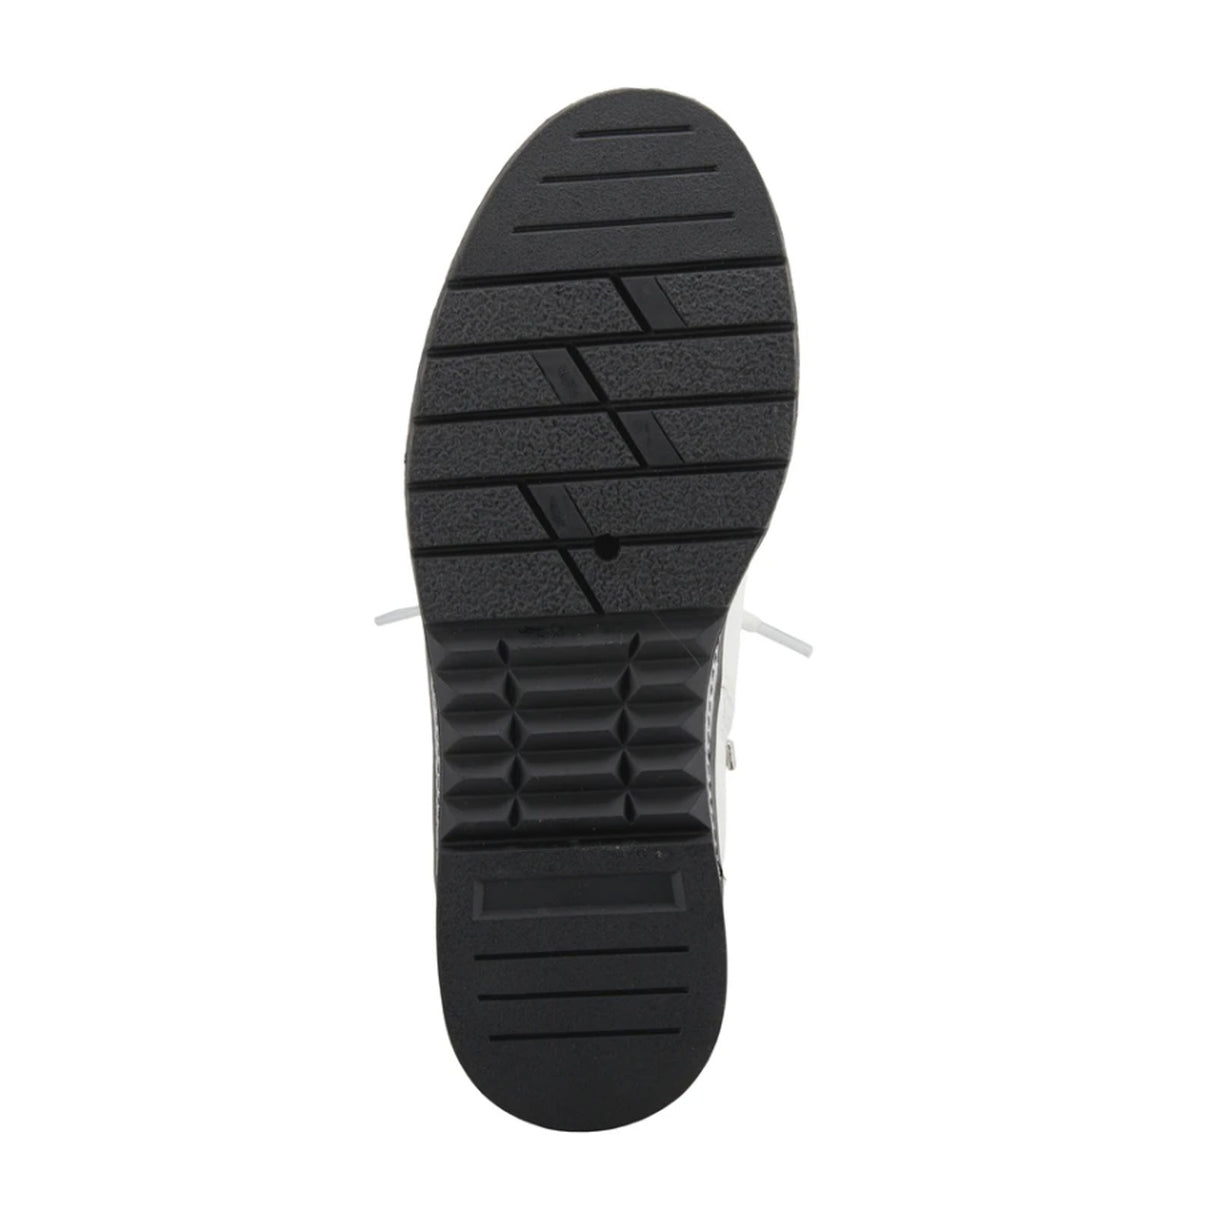 Azura Nena Winter Boot (Women) - White Boots - Winter - Low - The Heel Shoe Fitters